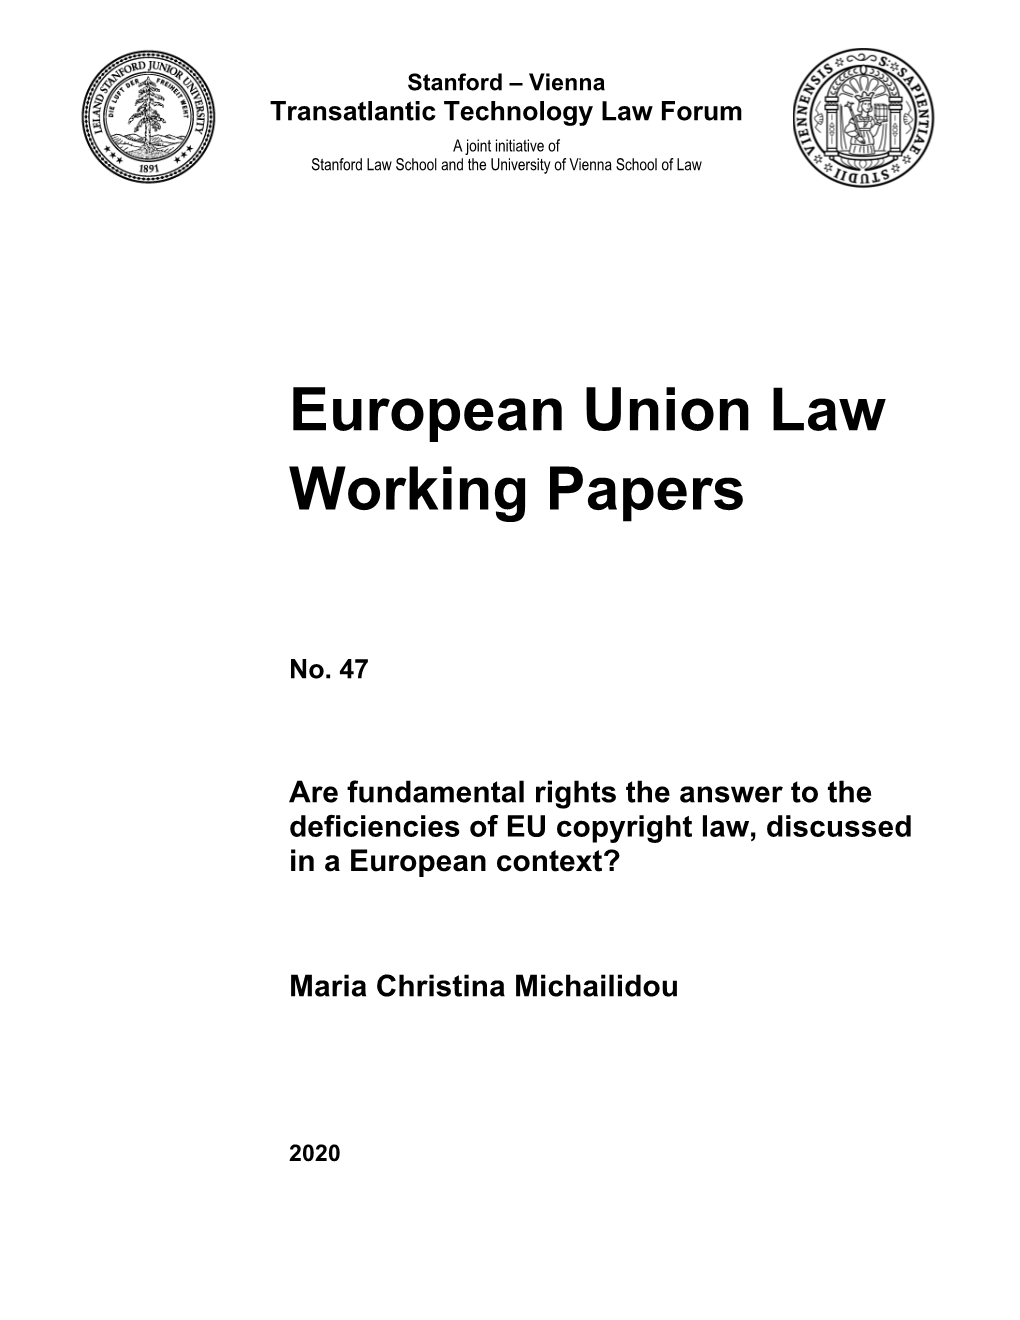 EU Law WP Xx Michailidou Cover